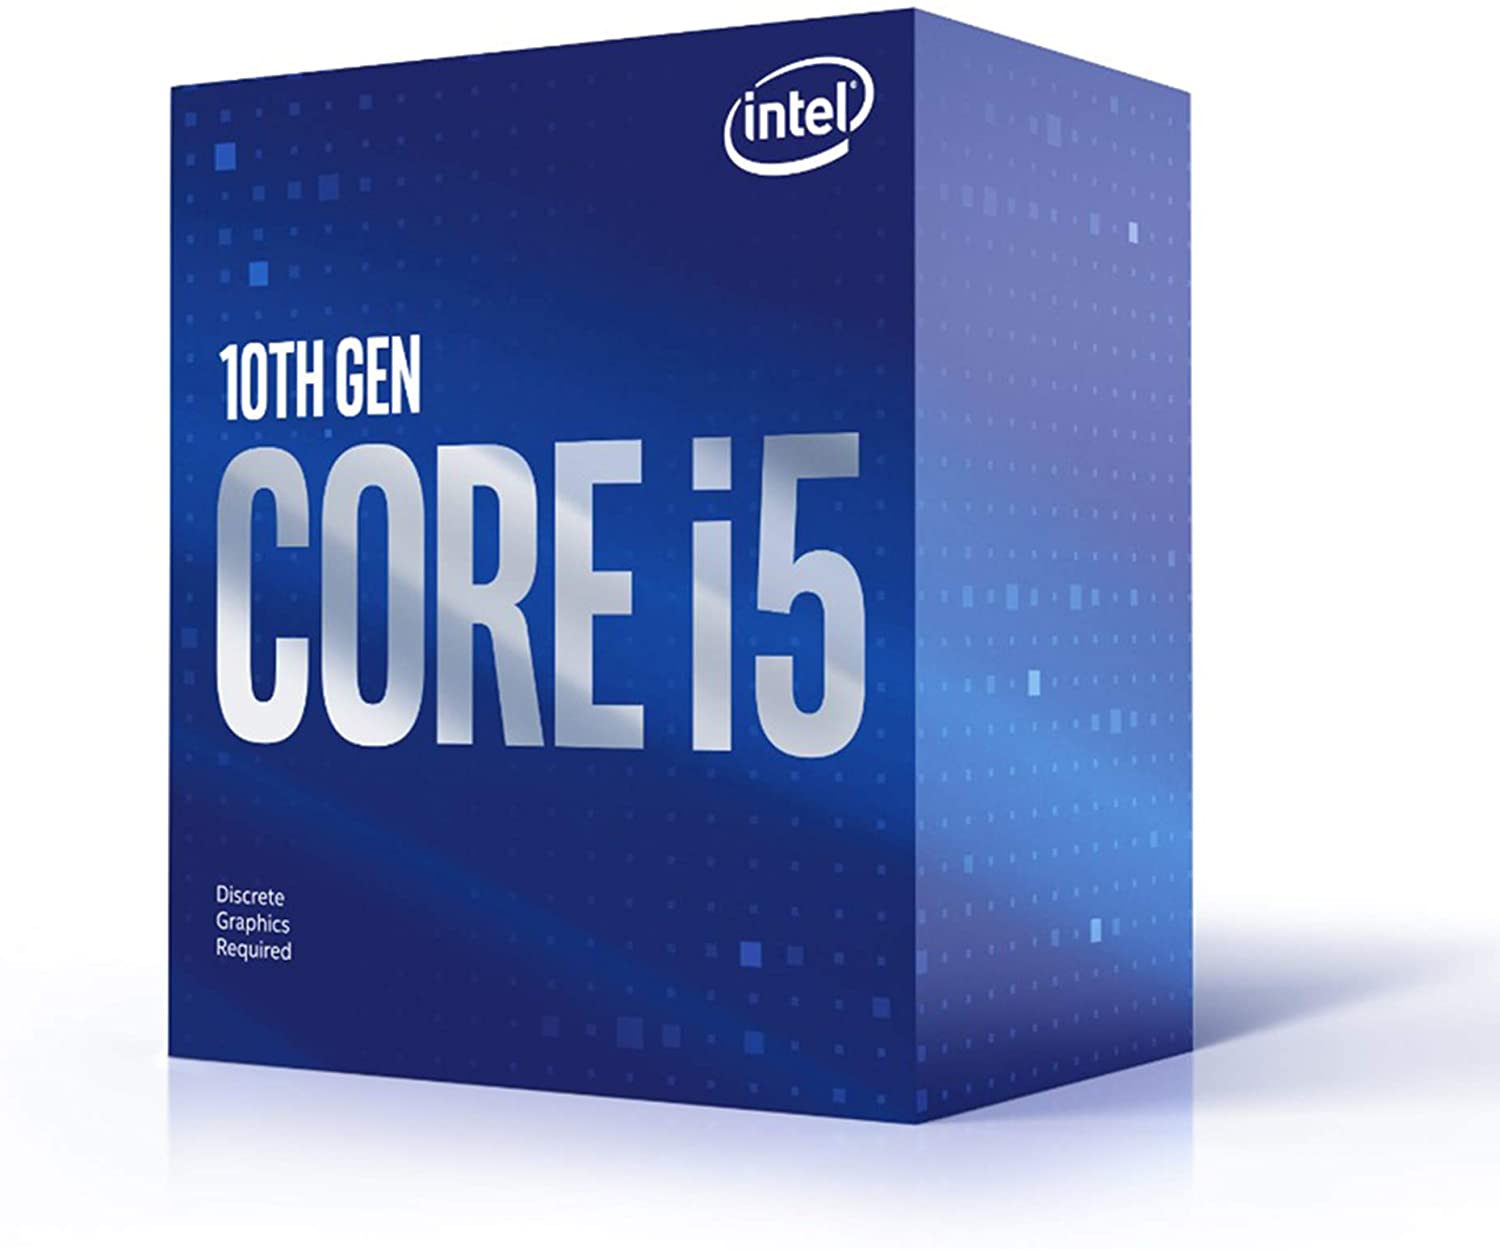 Intel Core i5 10th Gen Box